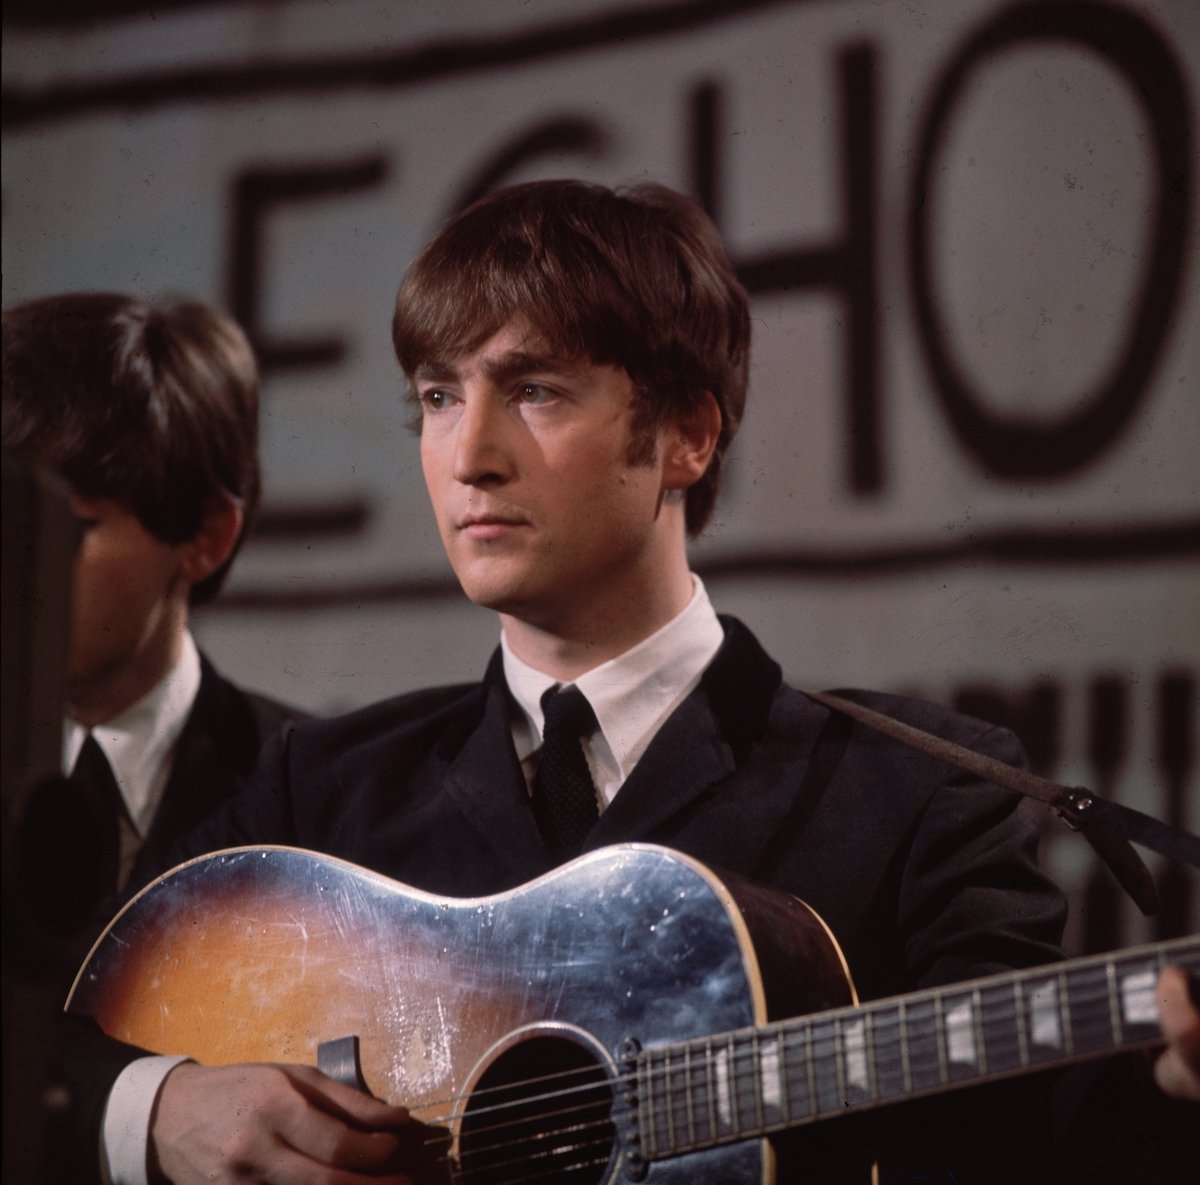 John Lennon plays guitar in The Beatles